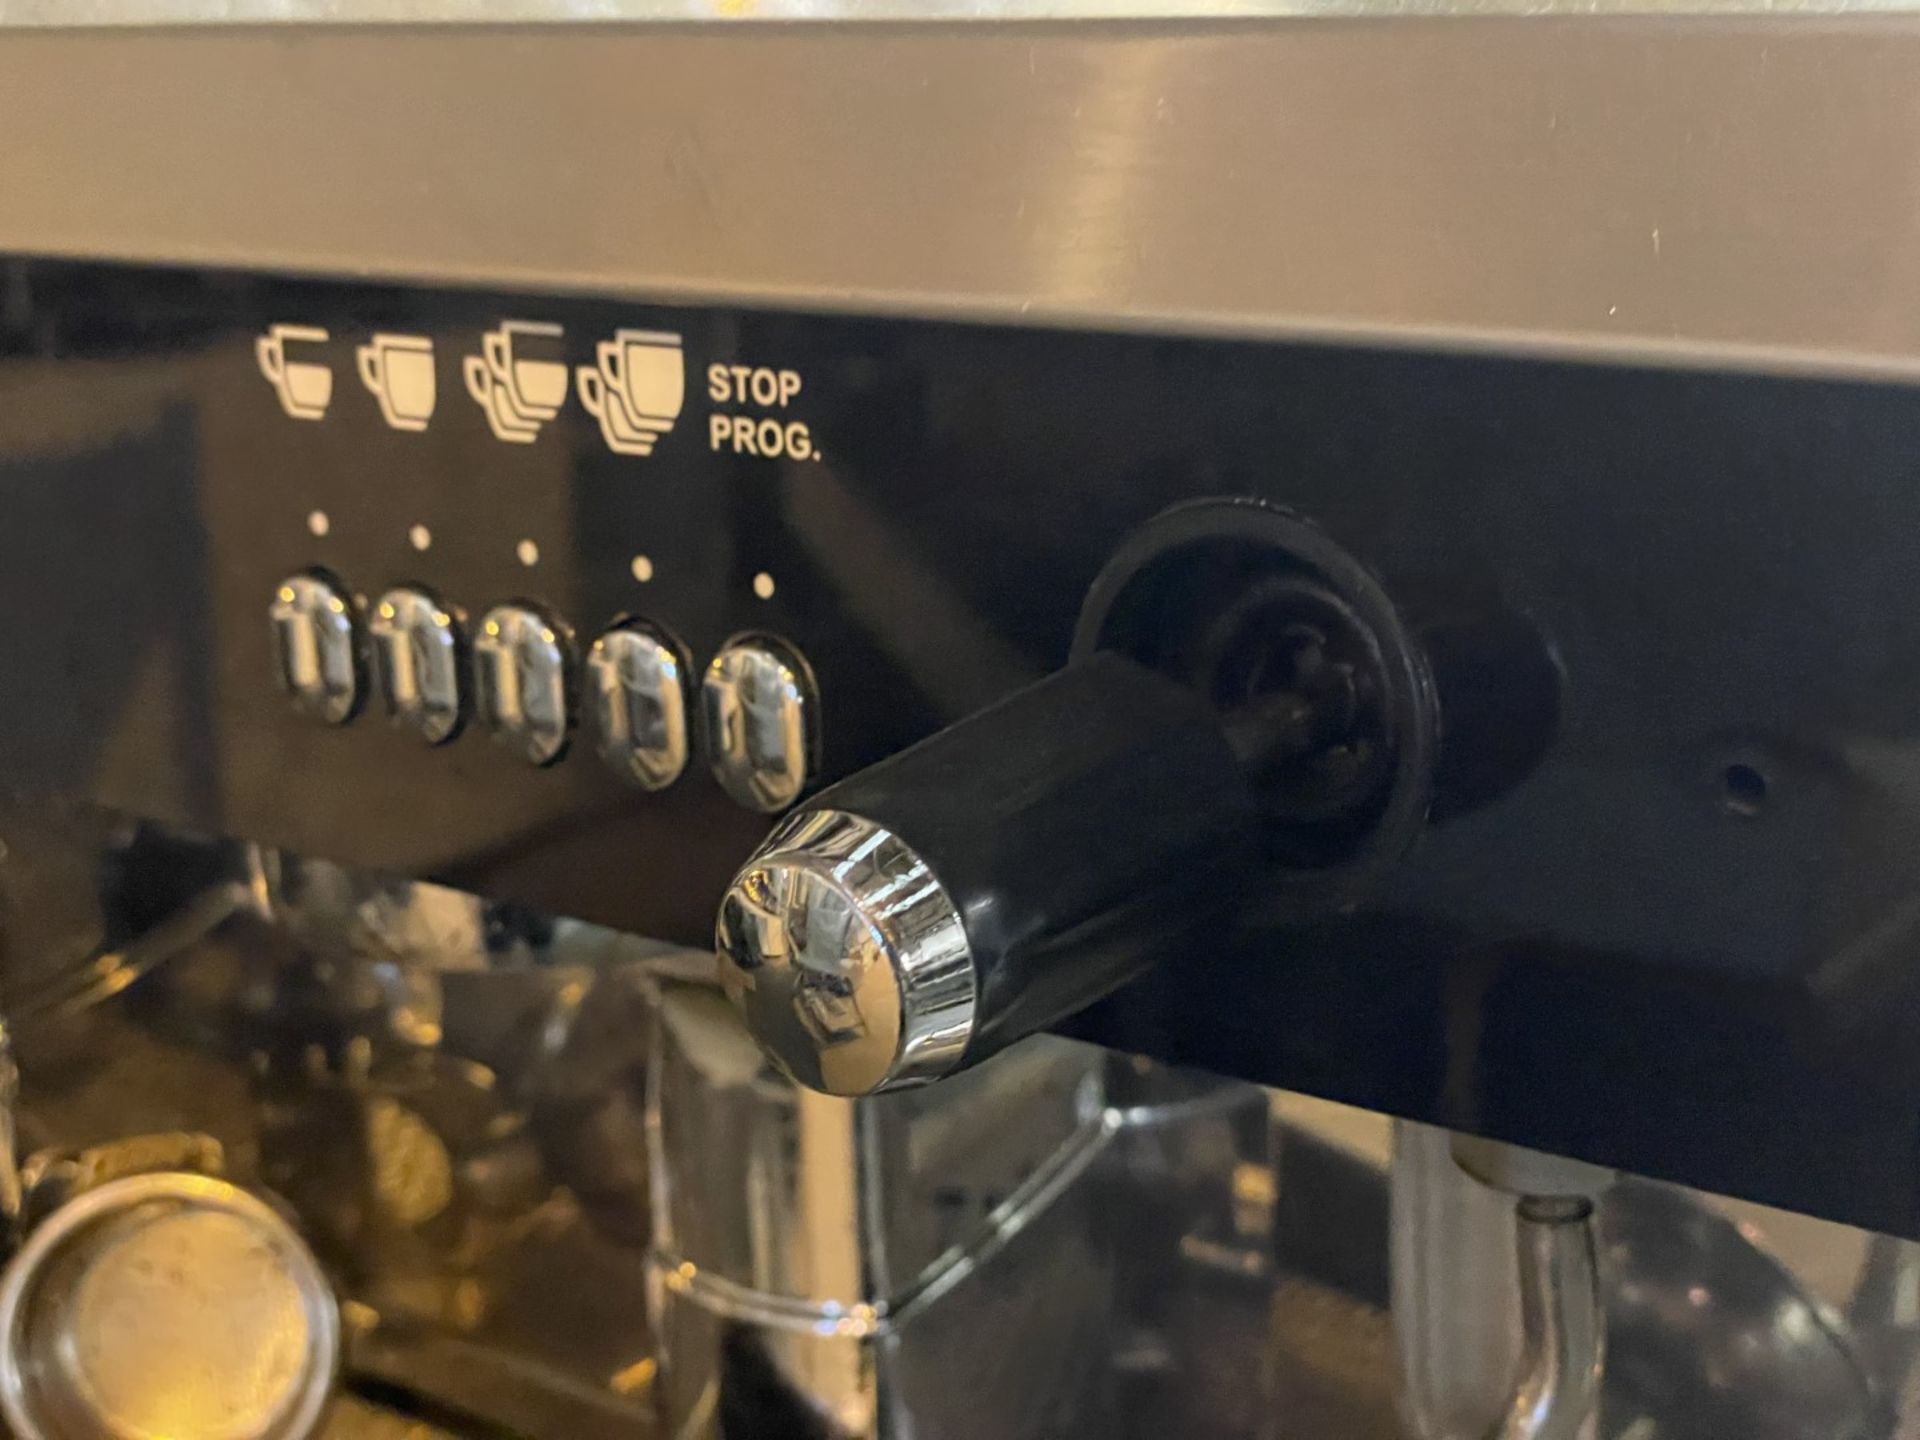 1 x Polaris Wega 3 Group Commercial Espresso Coffee Machine - Stainless Steel / Black Exterior - 3 P - Image 8 of 9